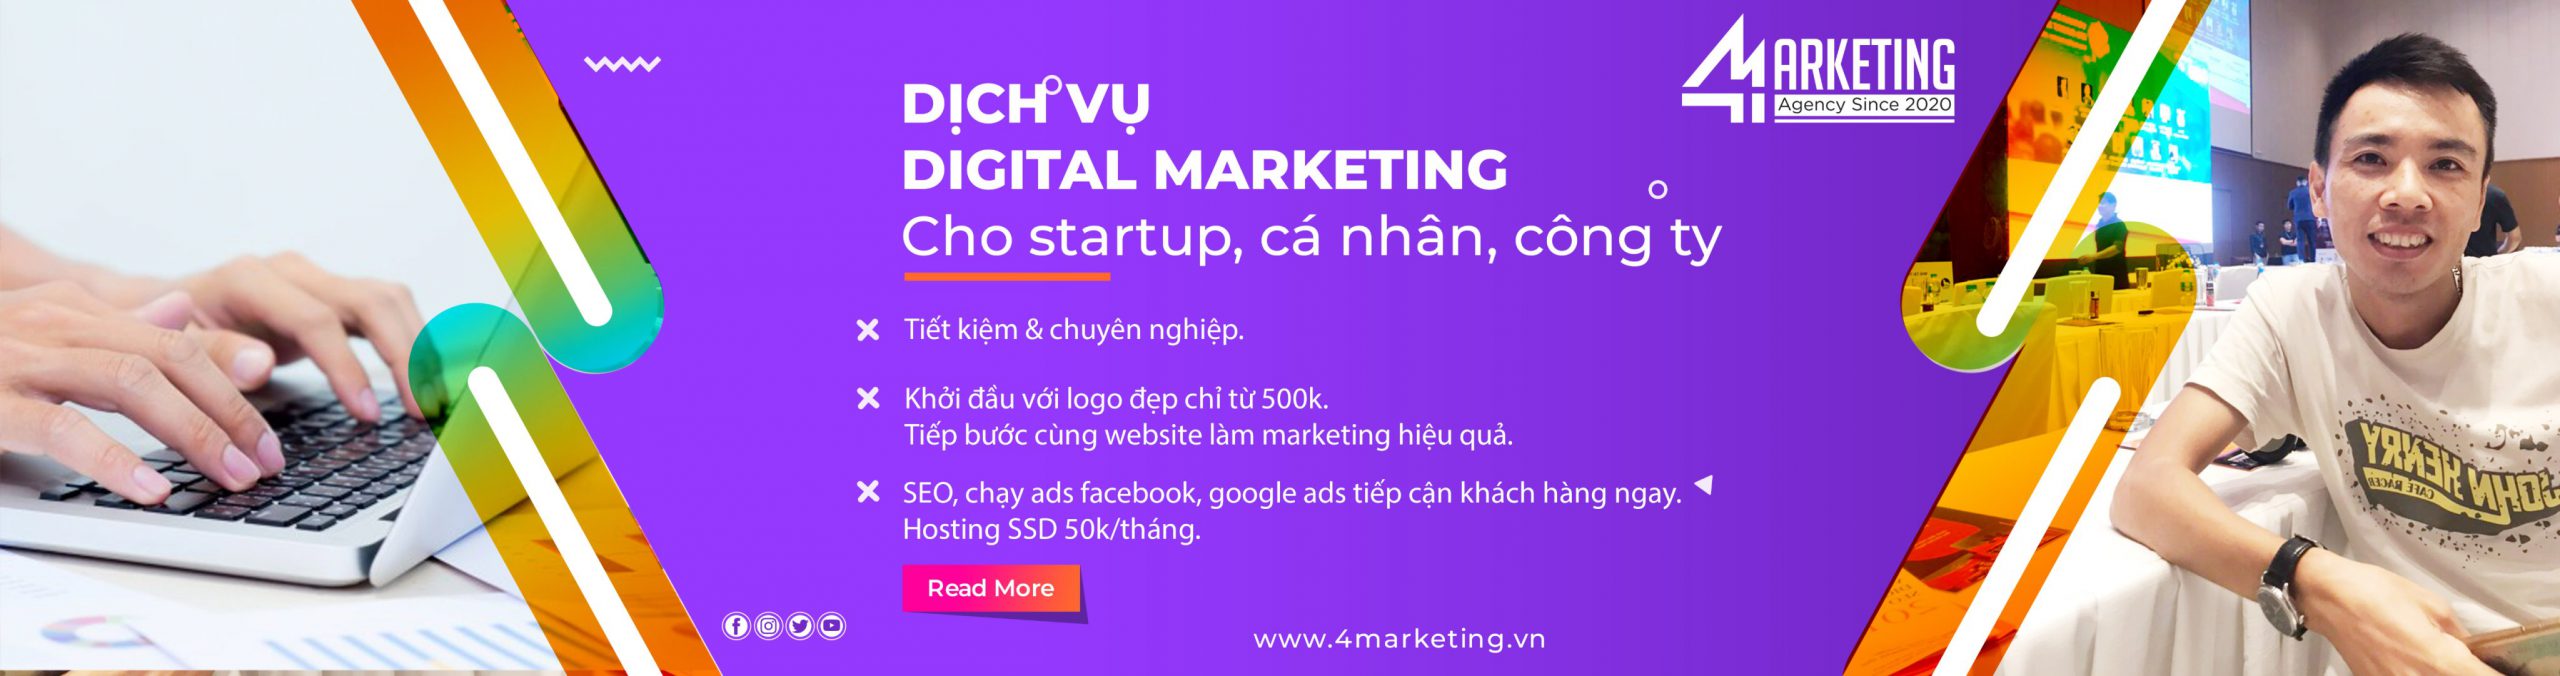 Dịch vụ digital marketing online trọn gói giá rẻ 4Marketing